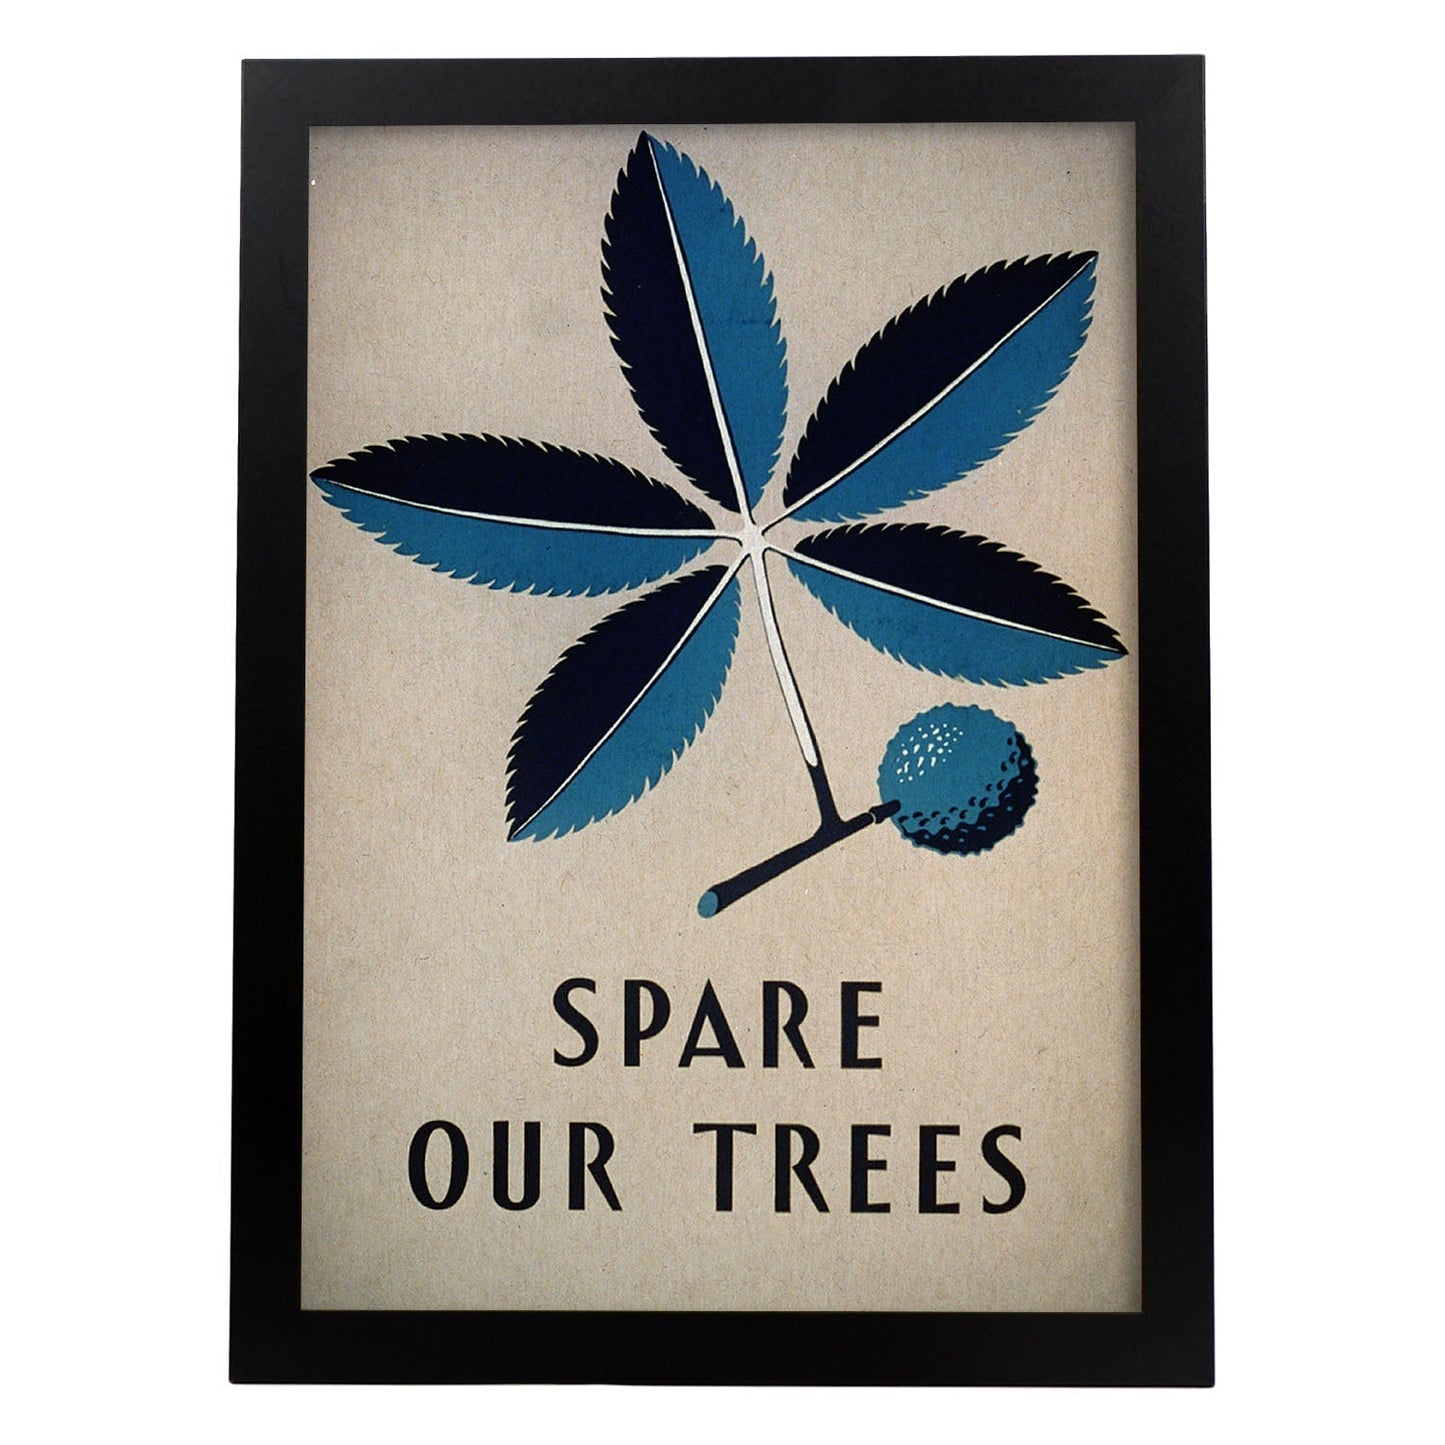 Poster vintage. Cartel vintage Spare our trees Ohio de 1938.-Artwork-Nacnic-A3-Marco Negro-Nacnic Estudio SL